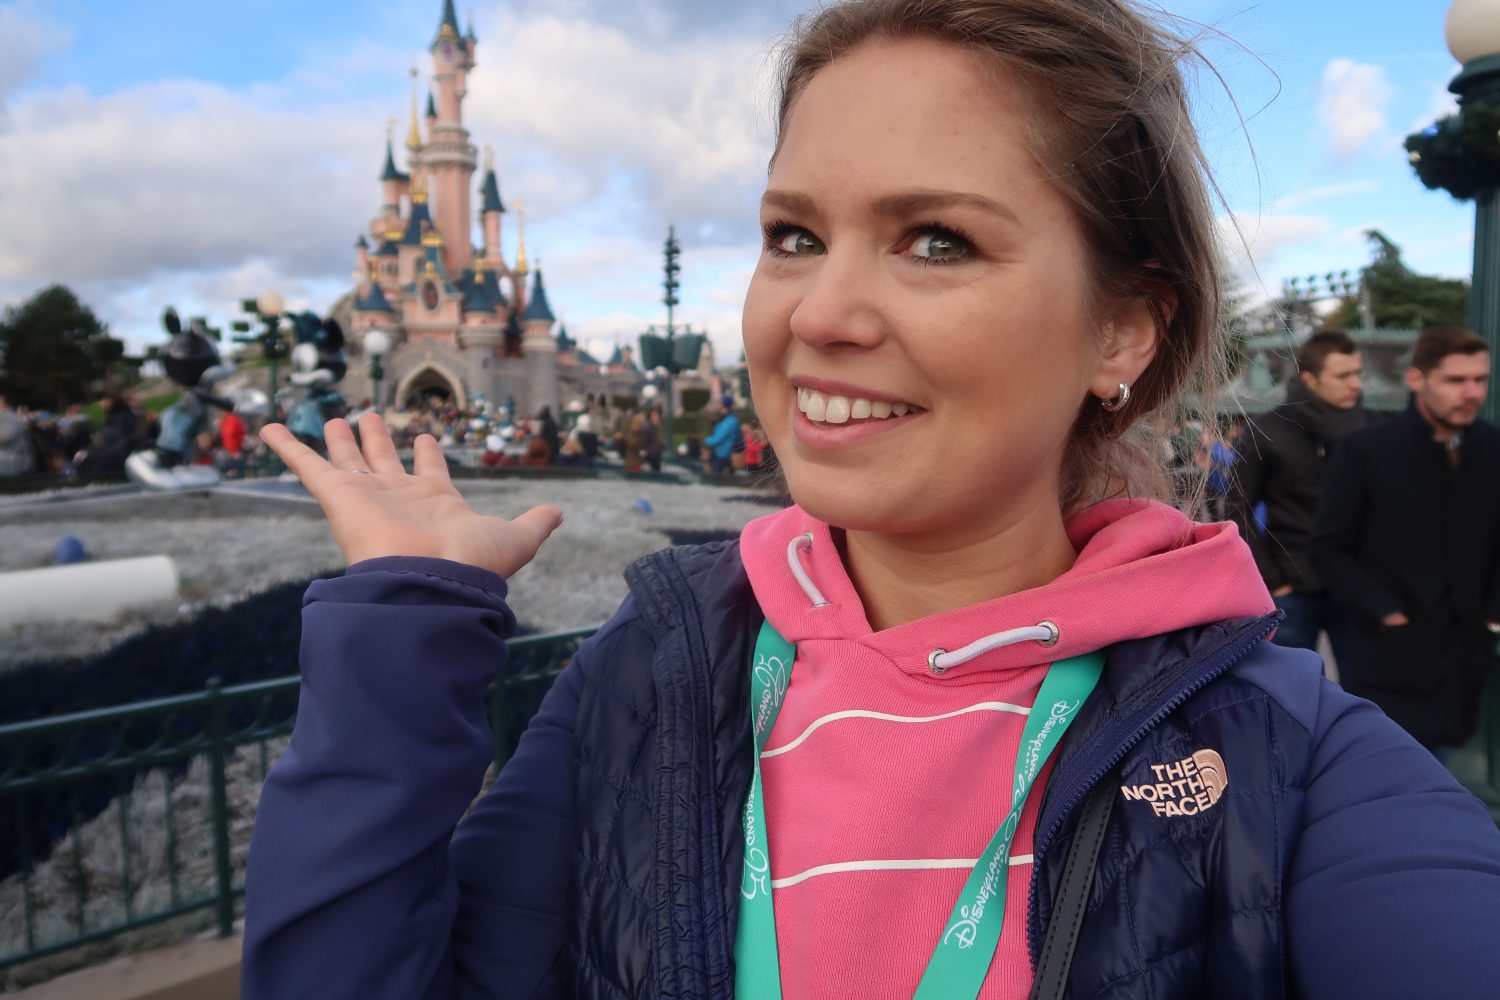 Vlog: Als VIP in Disneyland Paris (Christmas in Disneyland Paris 2017)